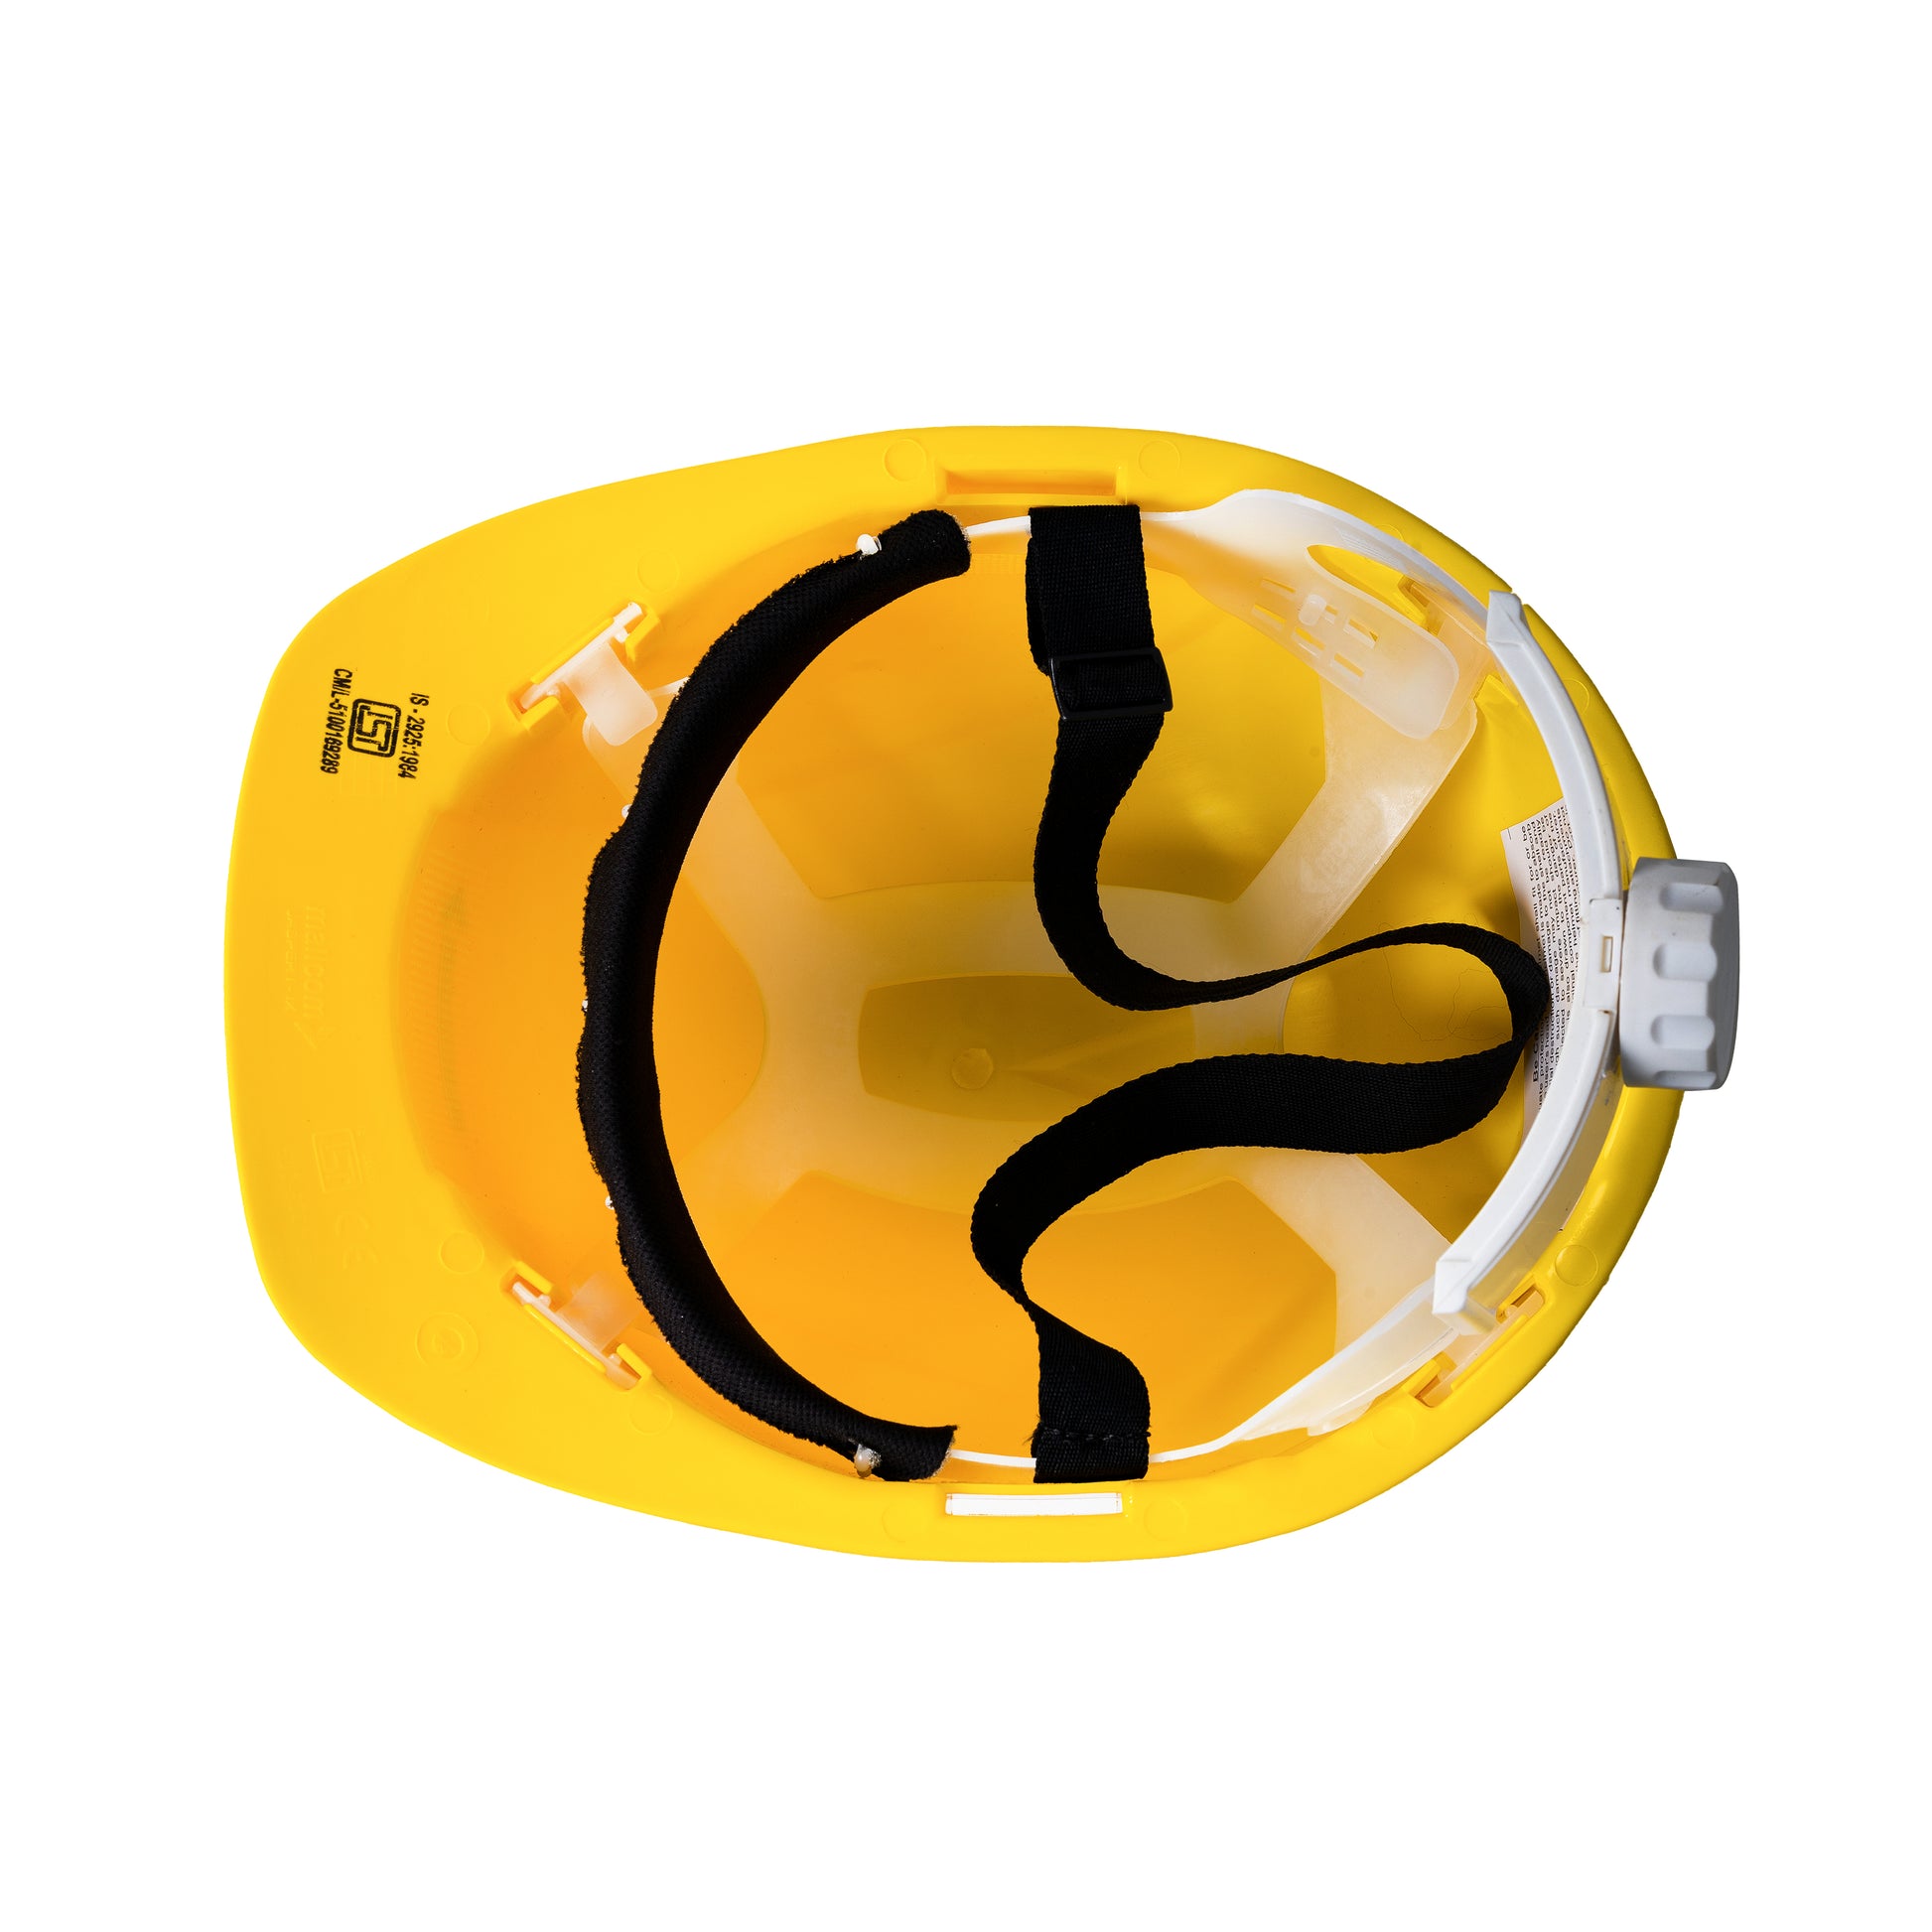 Safety helmet_Jasper III